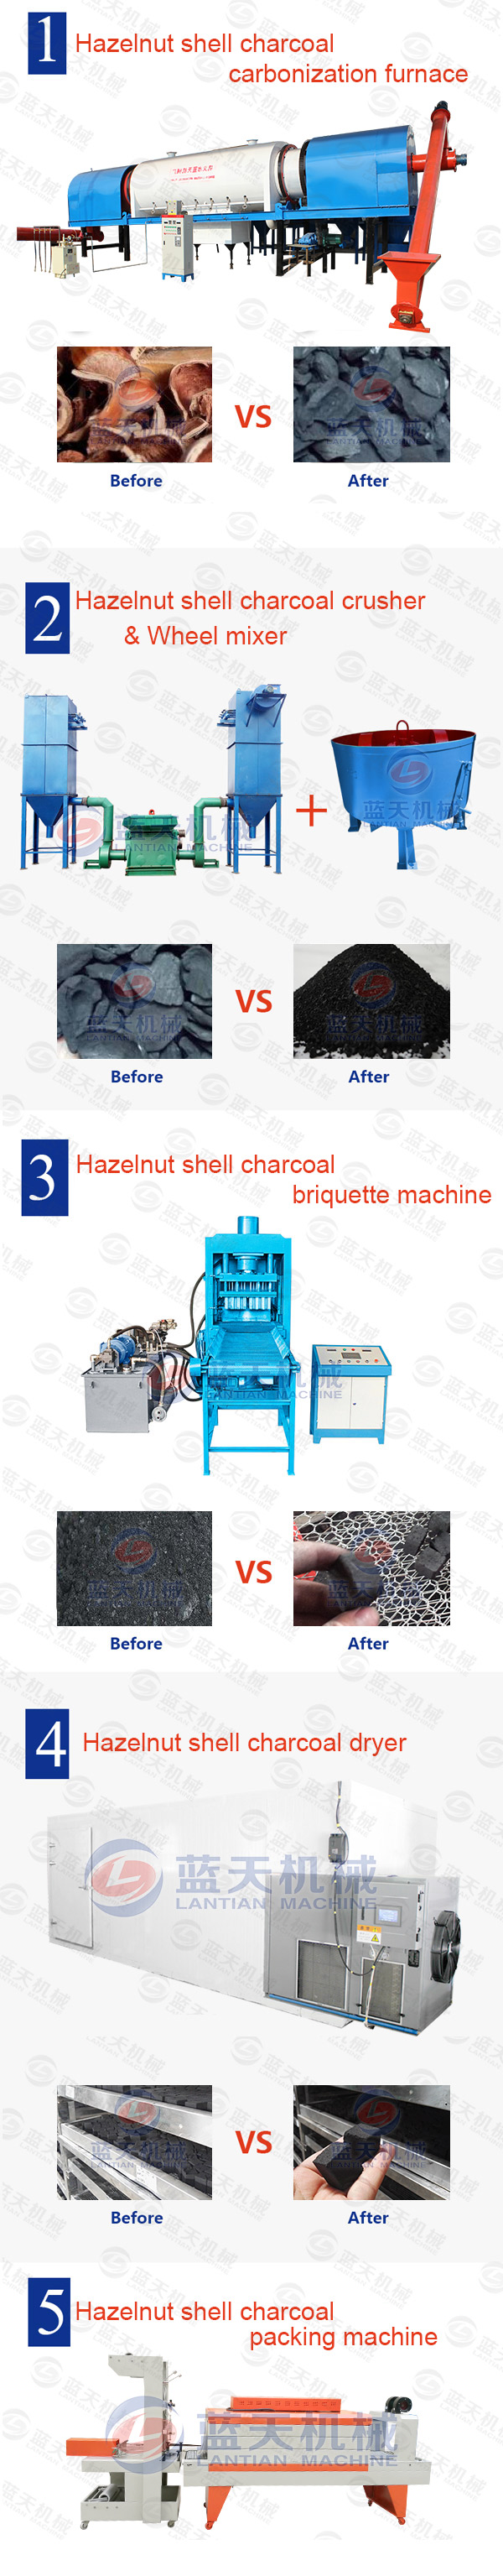 hazelnut shell charcoal briquetting machine